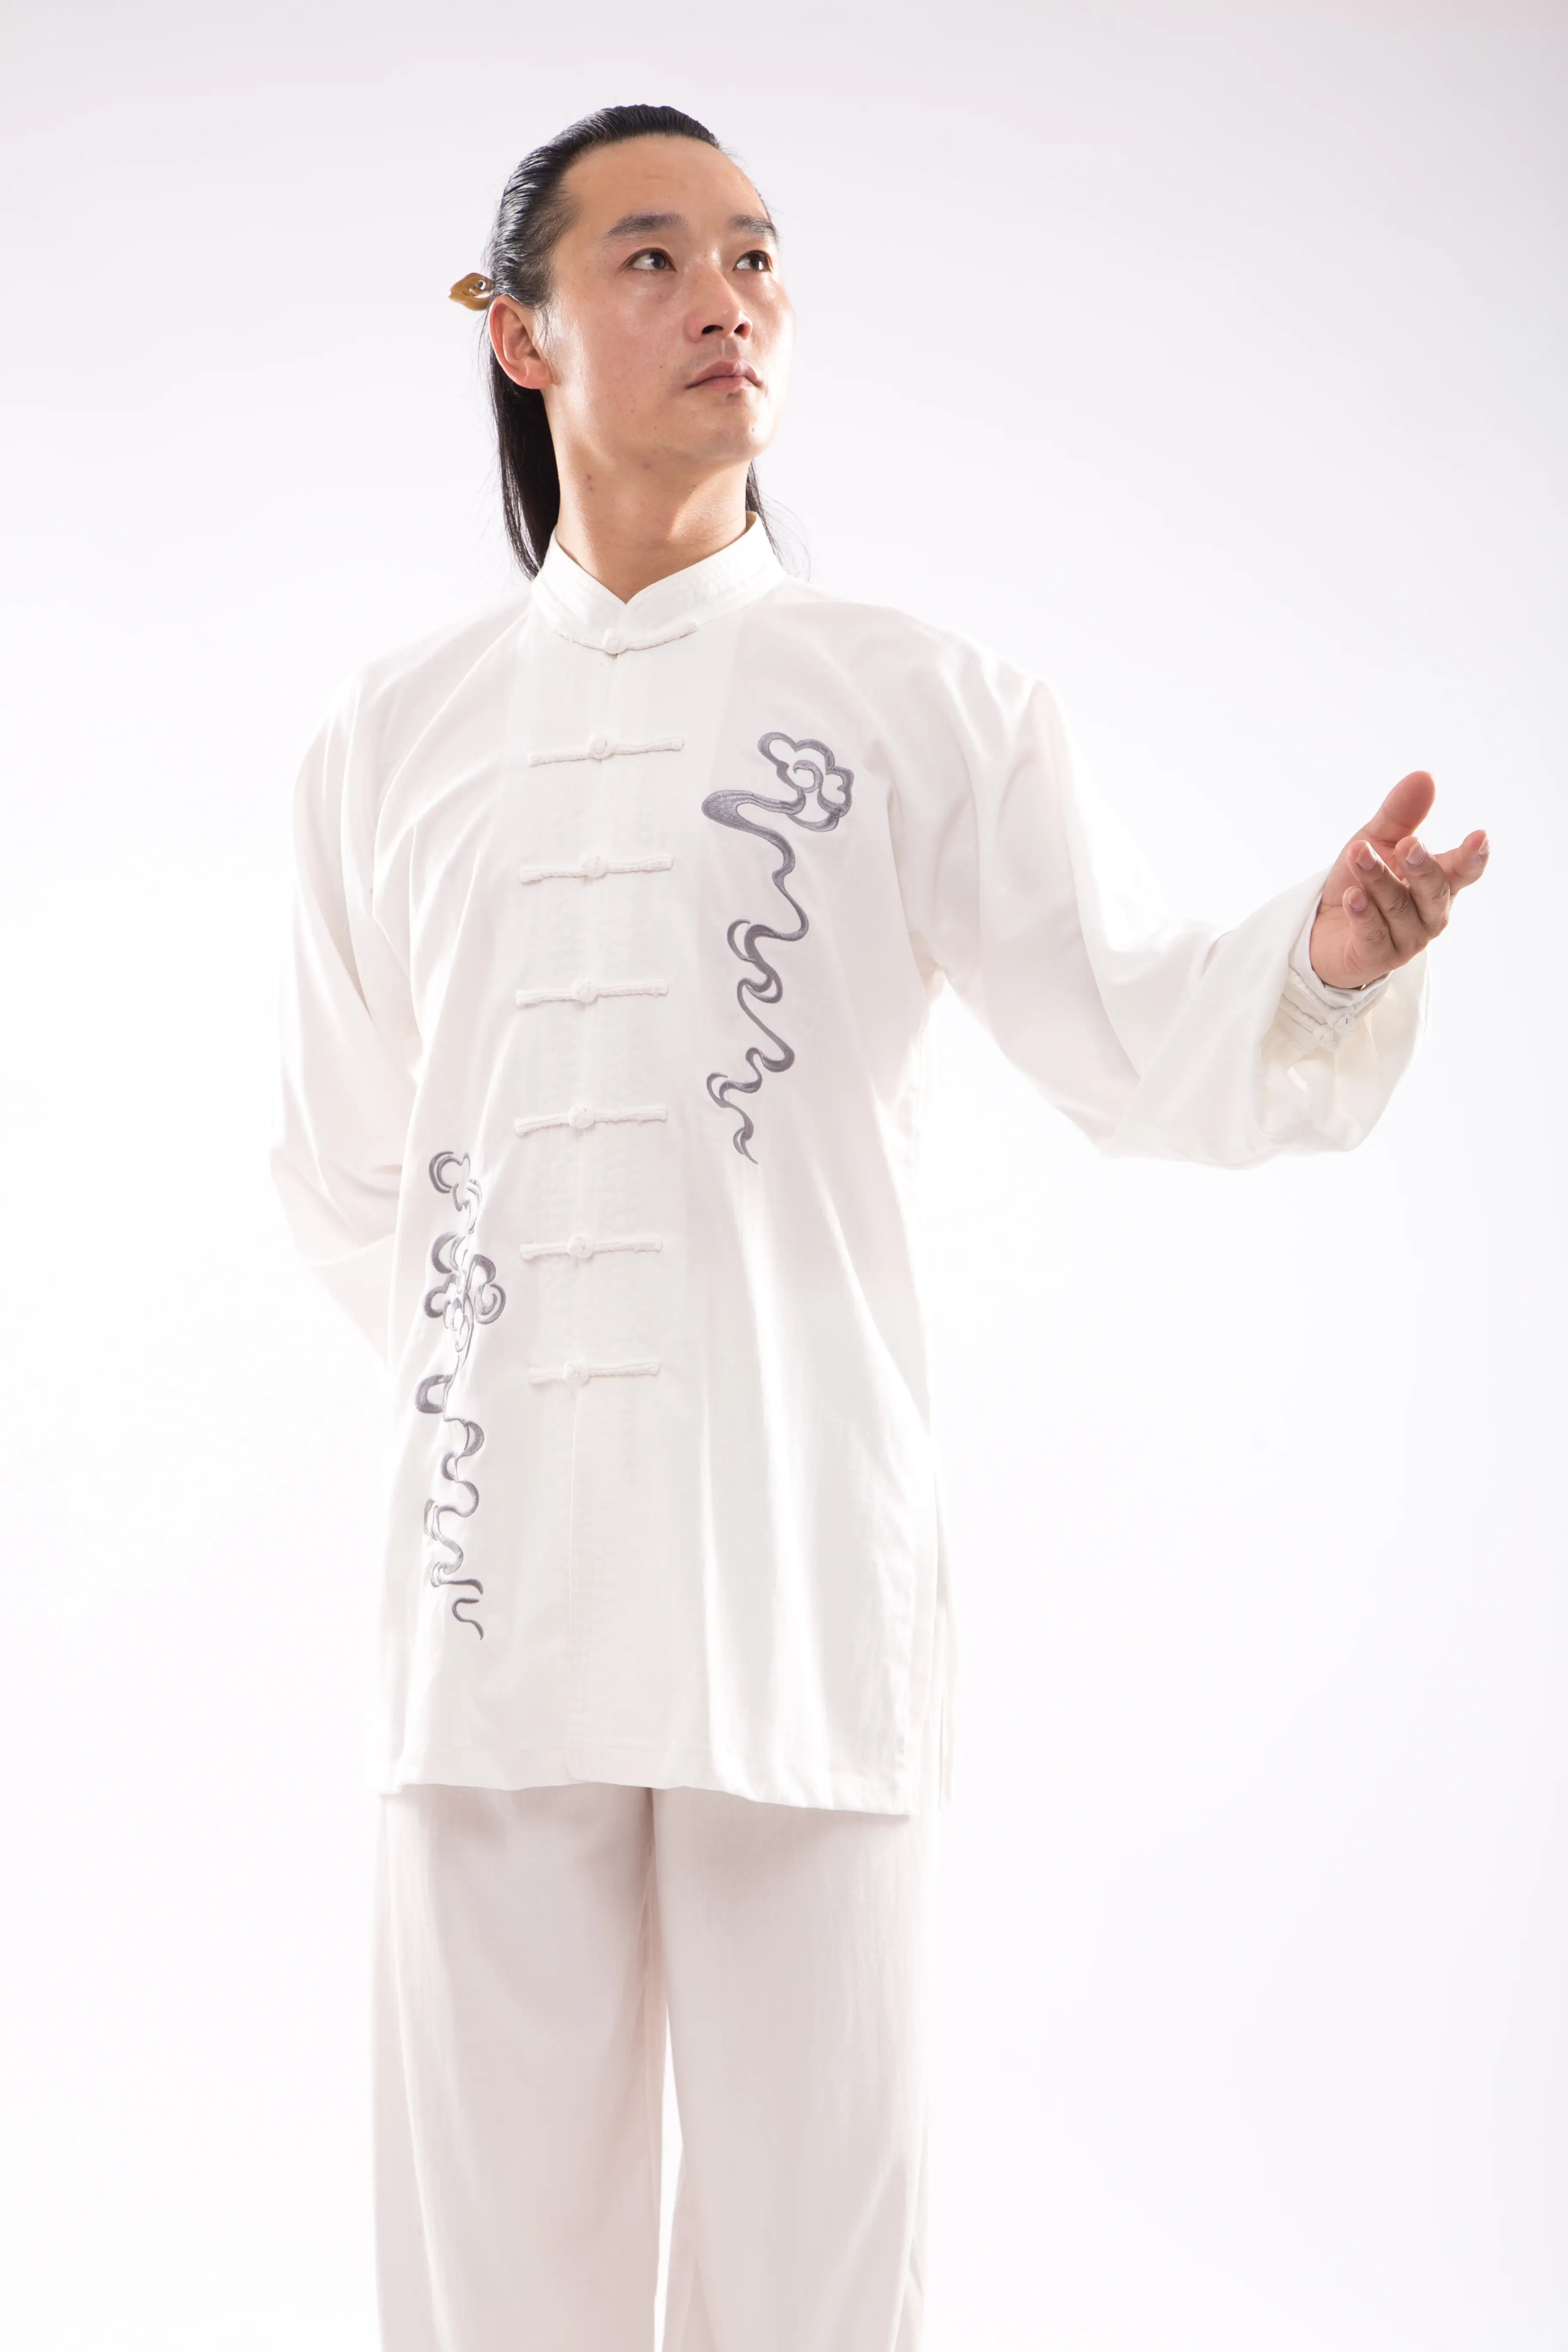 Classical White Auspicious Cloud Embroidered Wudang Tai Chi Wellness Ensemble: Unisex, Silk-Linen Blend - Timelessly Elegant Traditional Hanfu Martial Arts Uniform